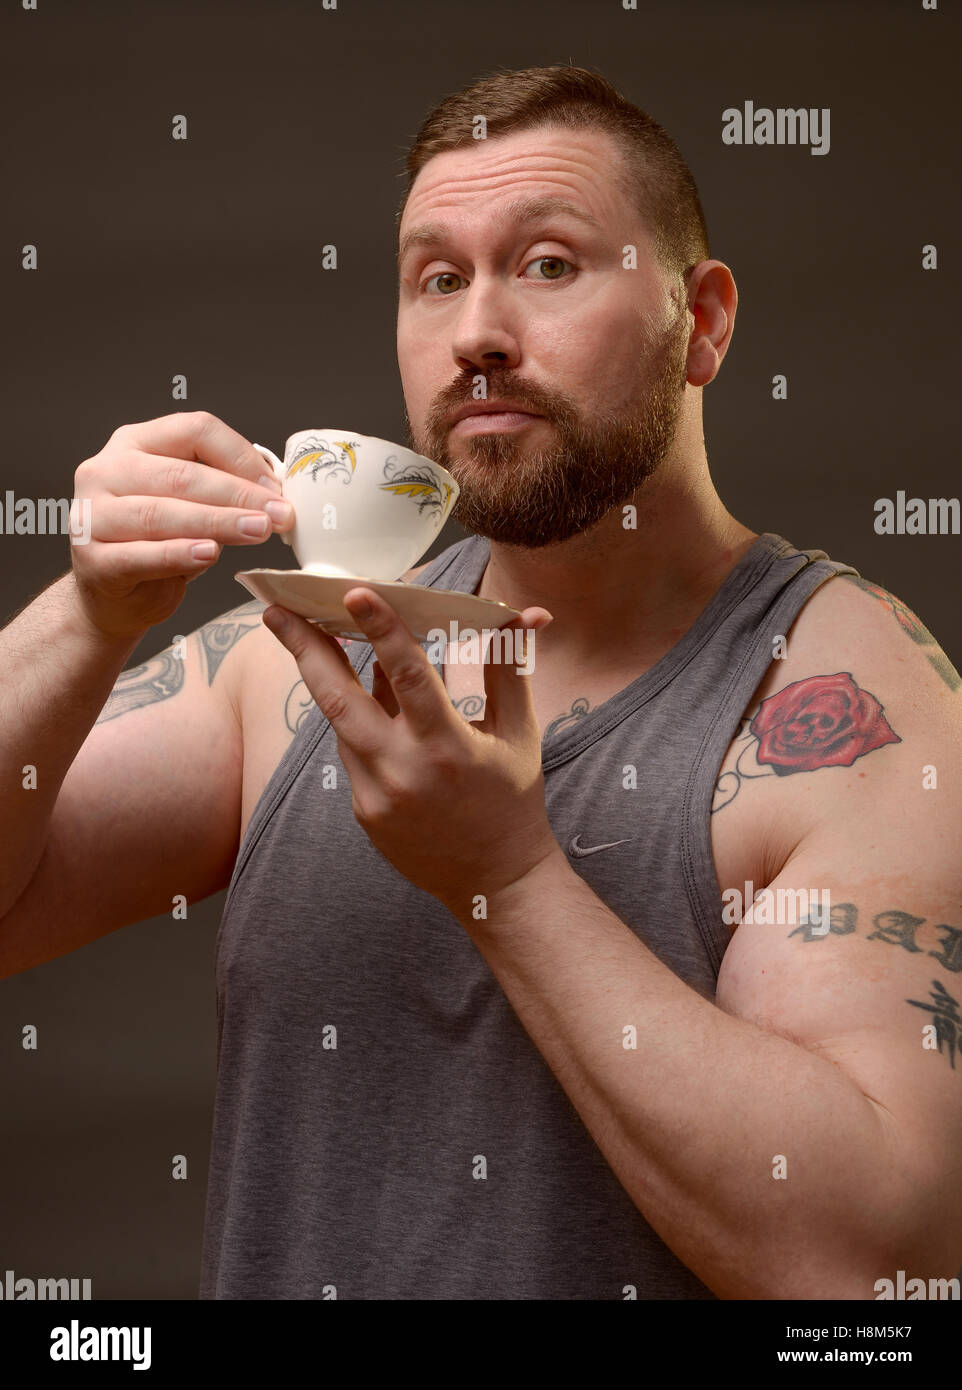 A tough strong man drinking a delicate cup of tea. Stock Photo